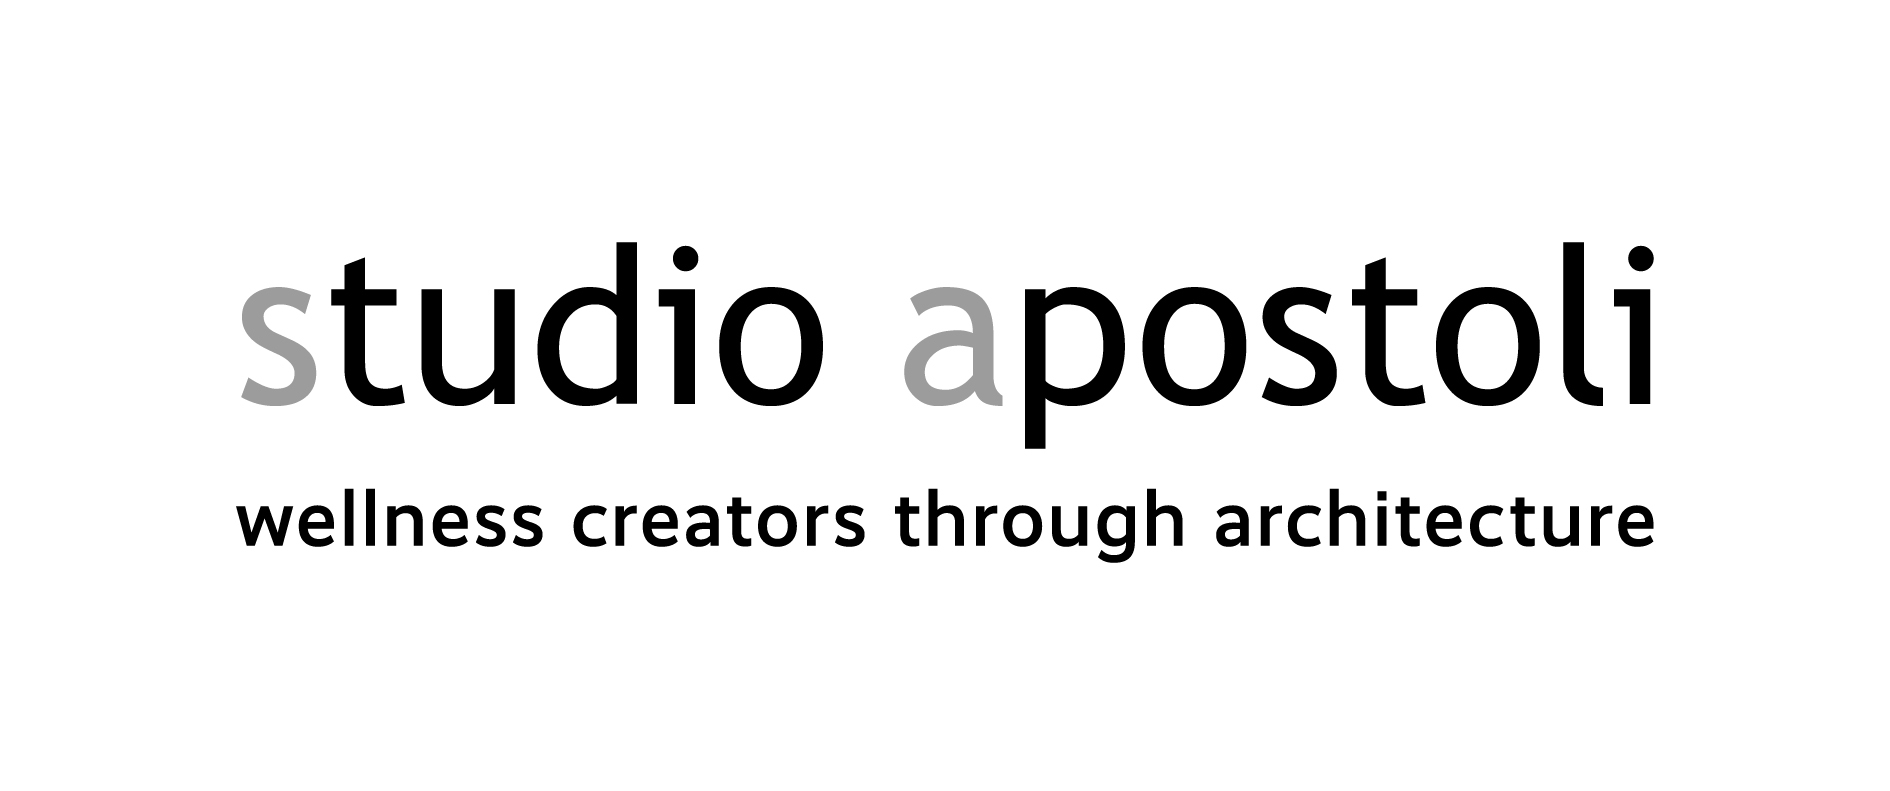 Studio Apostoli - Wellness creators through architecture